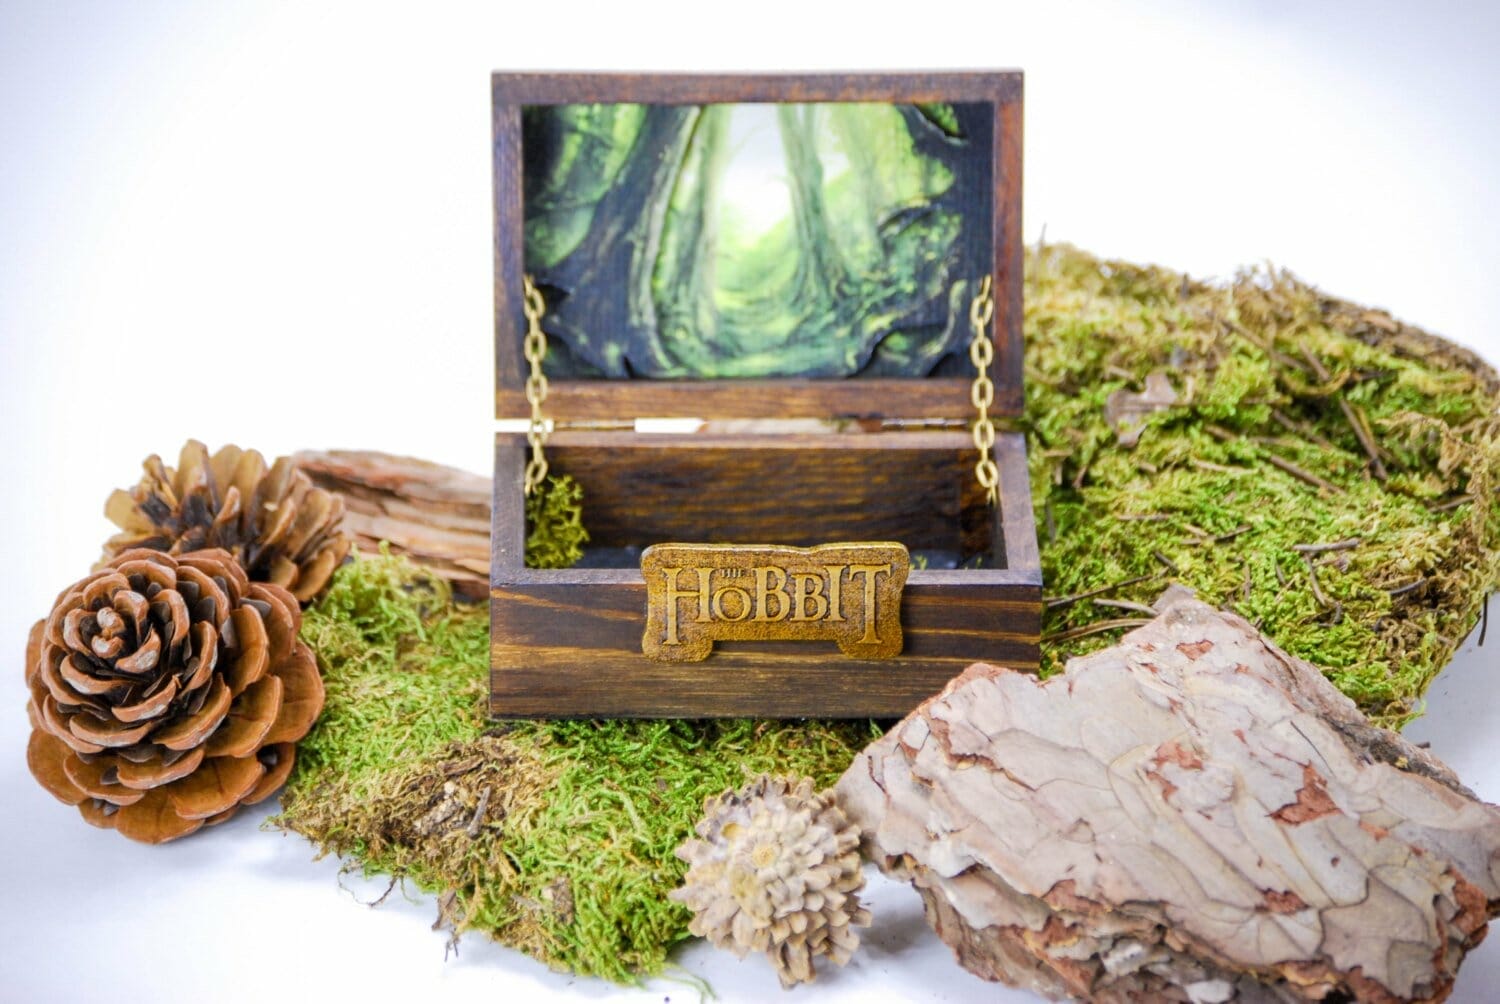 Hobbit box